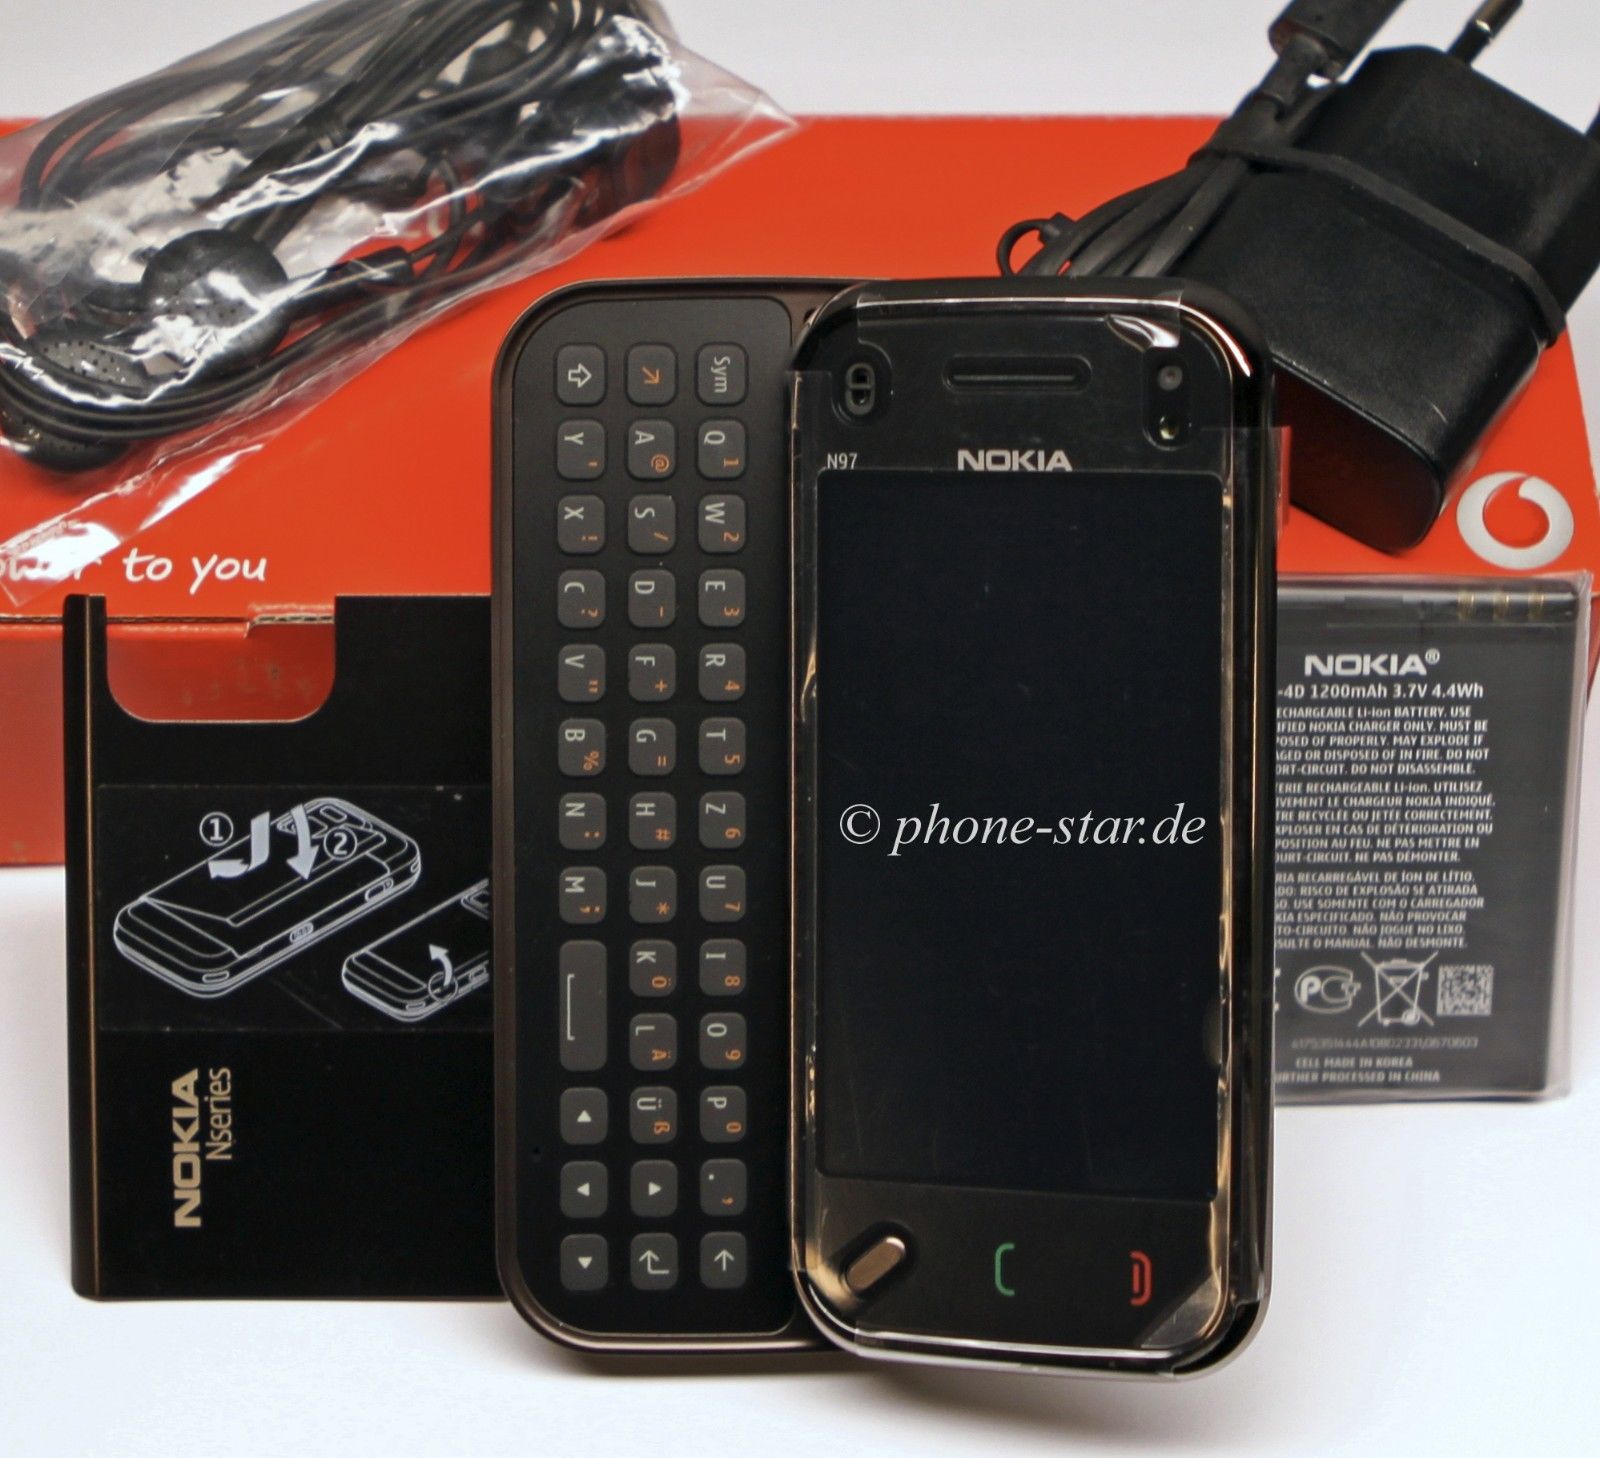 Nokia N97-4 mini 8GB RM-555 Handy Smartphone Touch Kamera MP3 WLAN UMTS wie Neu